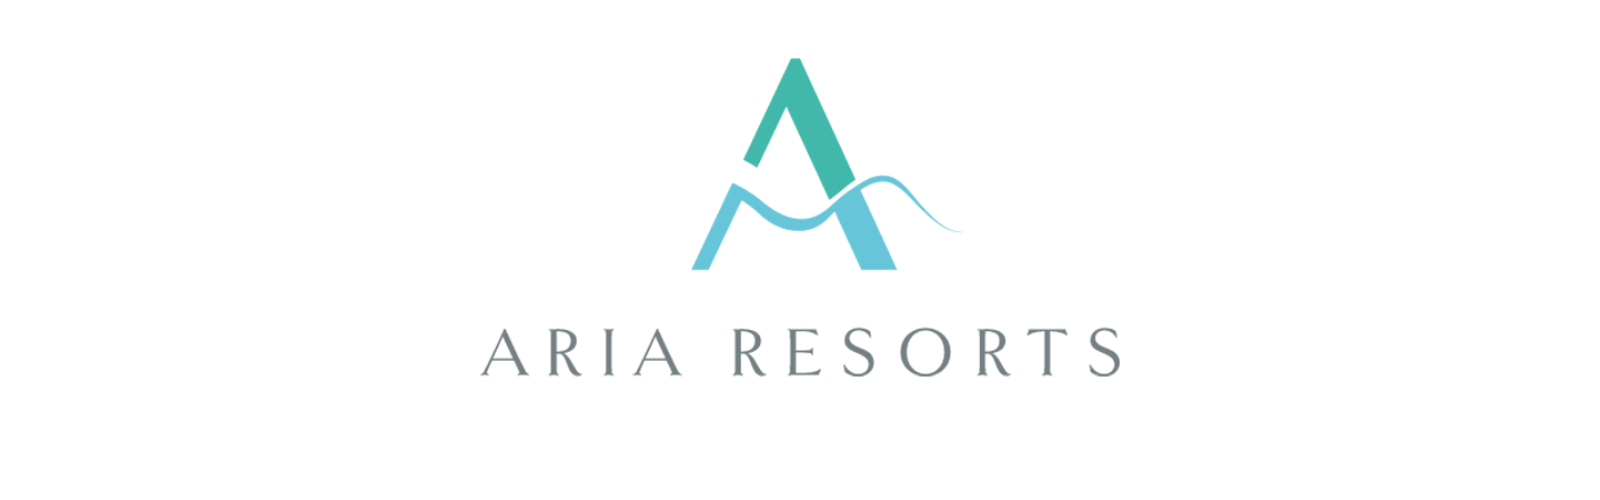 Aria Resorts logo wide